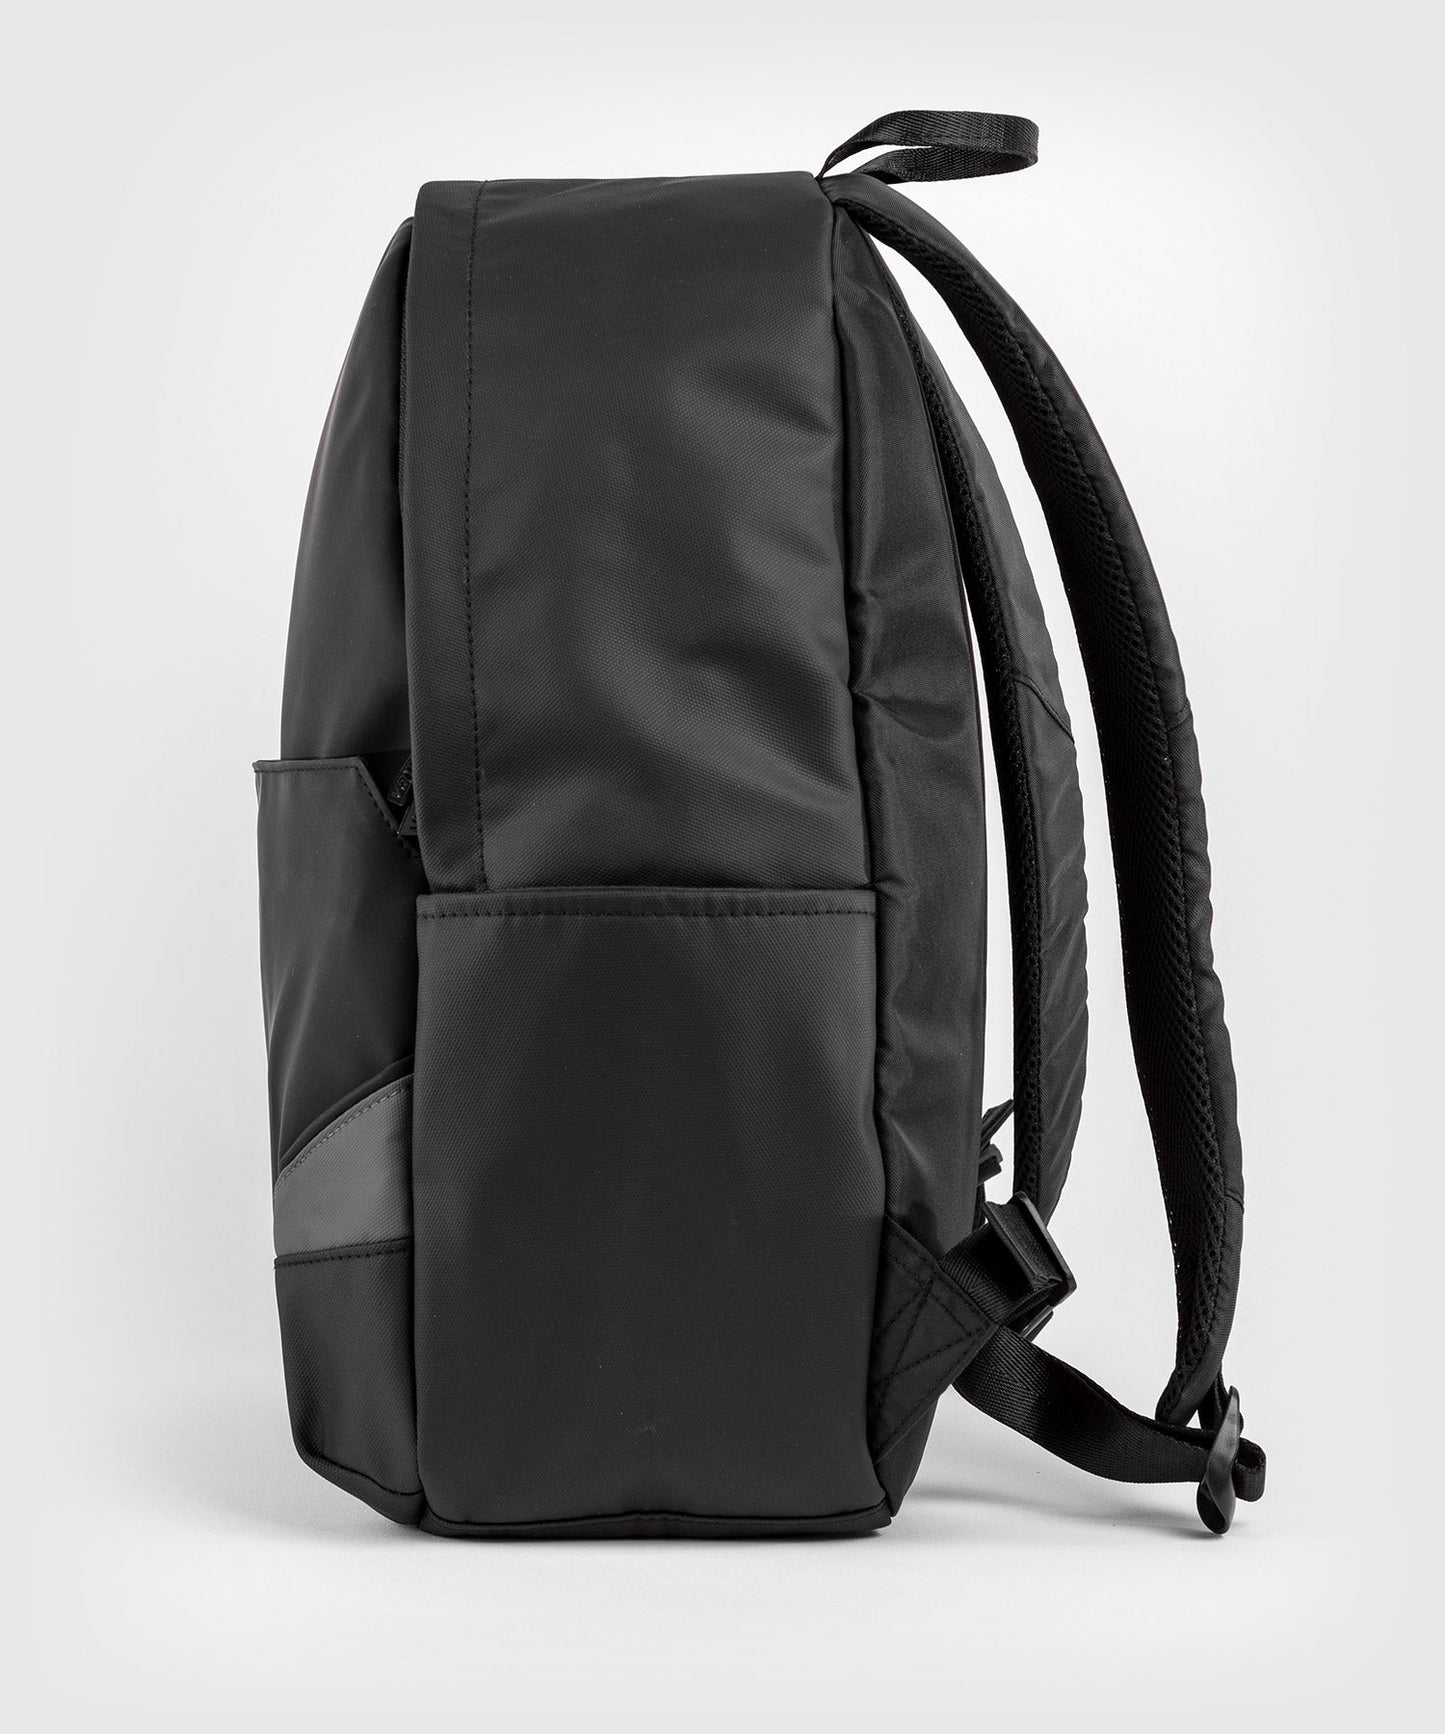 Venum Evo 2 Light Backpack - Black/Grey